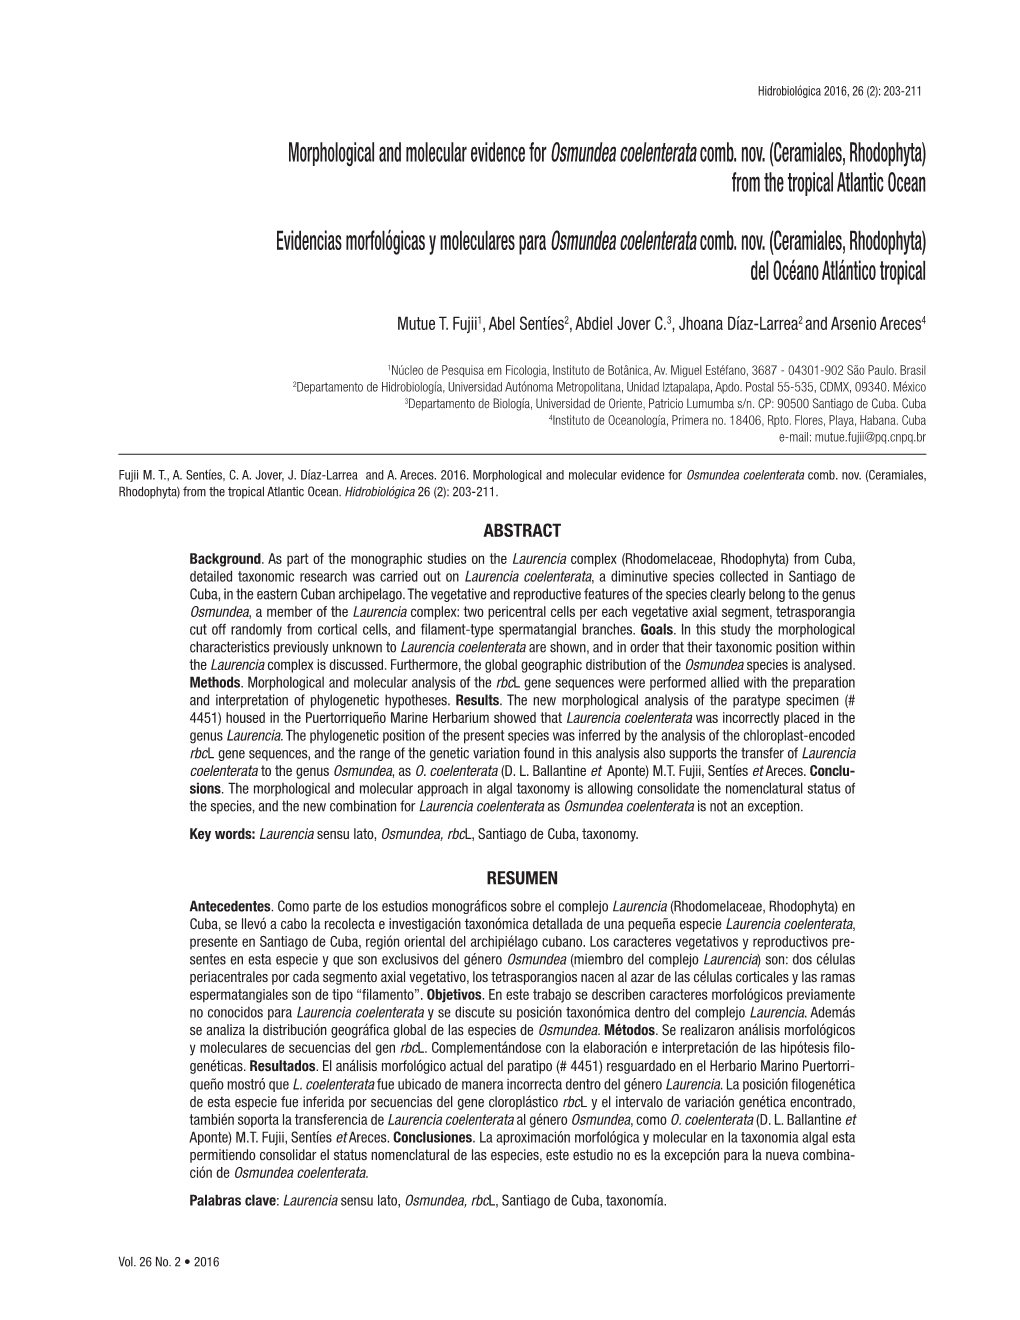 Morphological and Molecular Evidence for Osmundea Coelenterata Comb